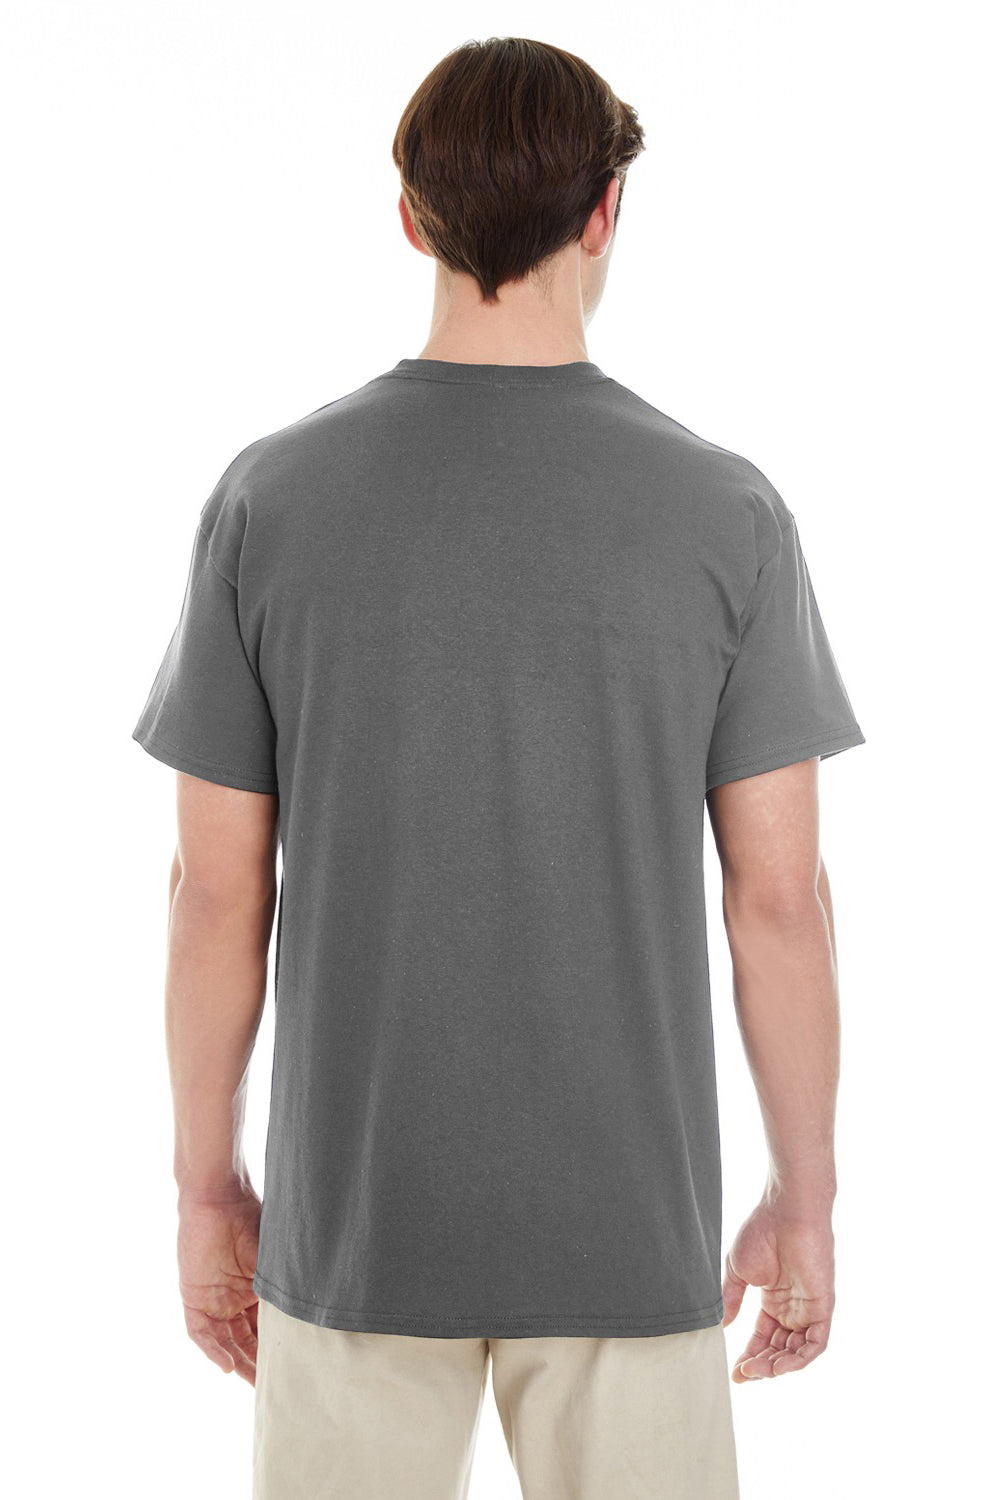 Gildan G530 Mens Short Sleeve Crewneck T-Shirt w/ Pocket Charcoal Grey Back